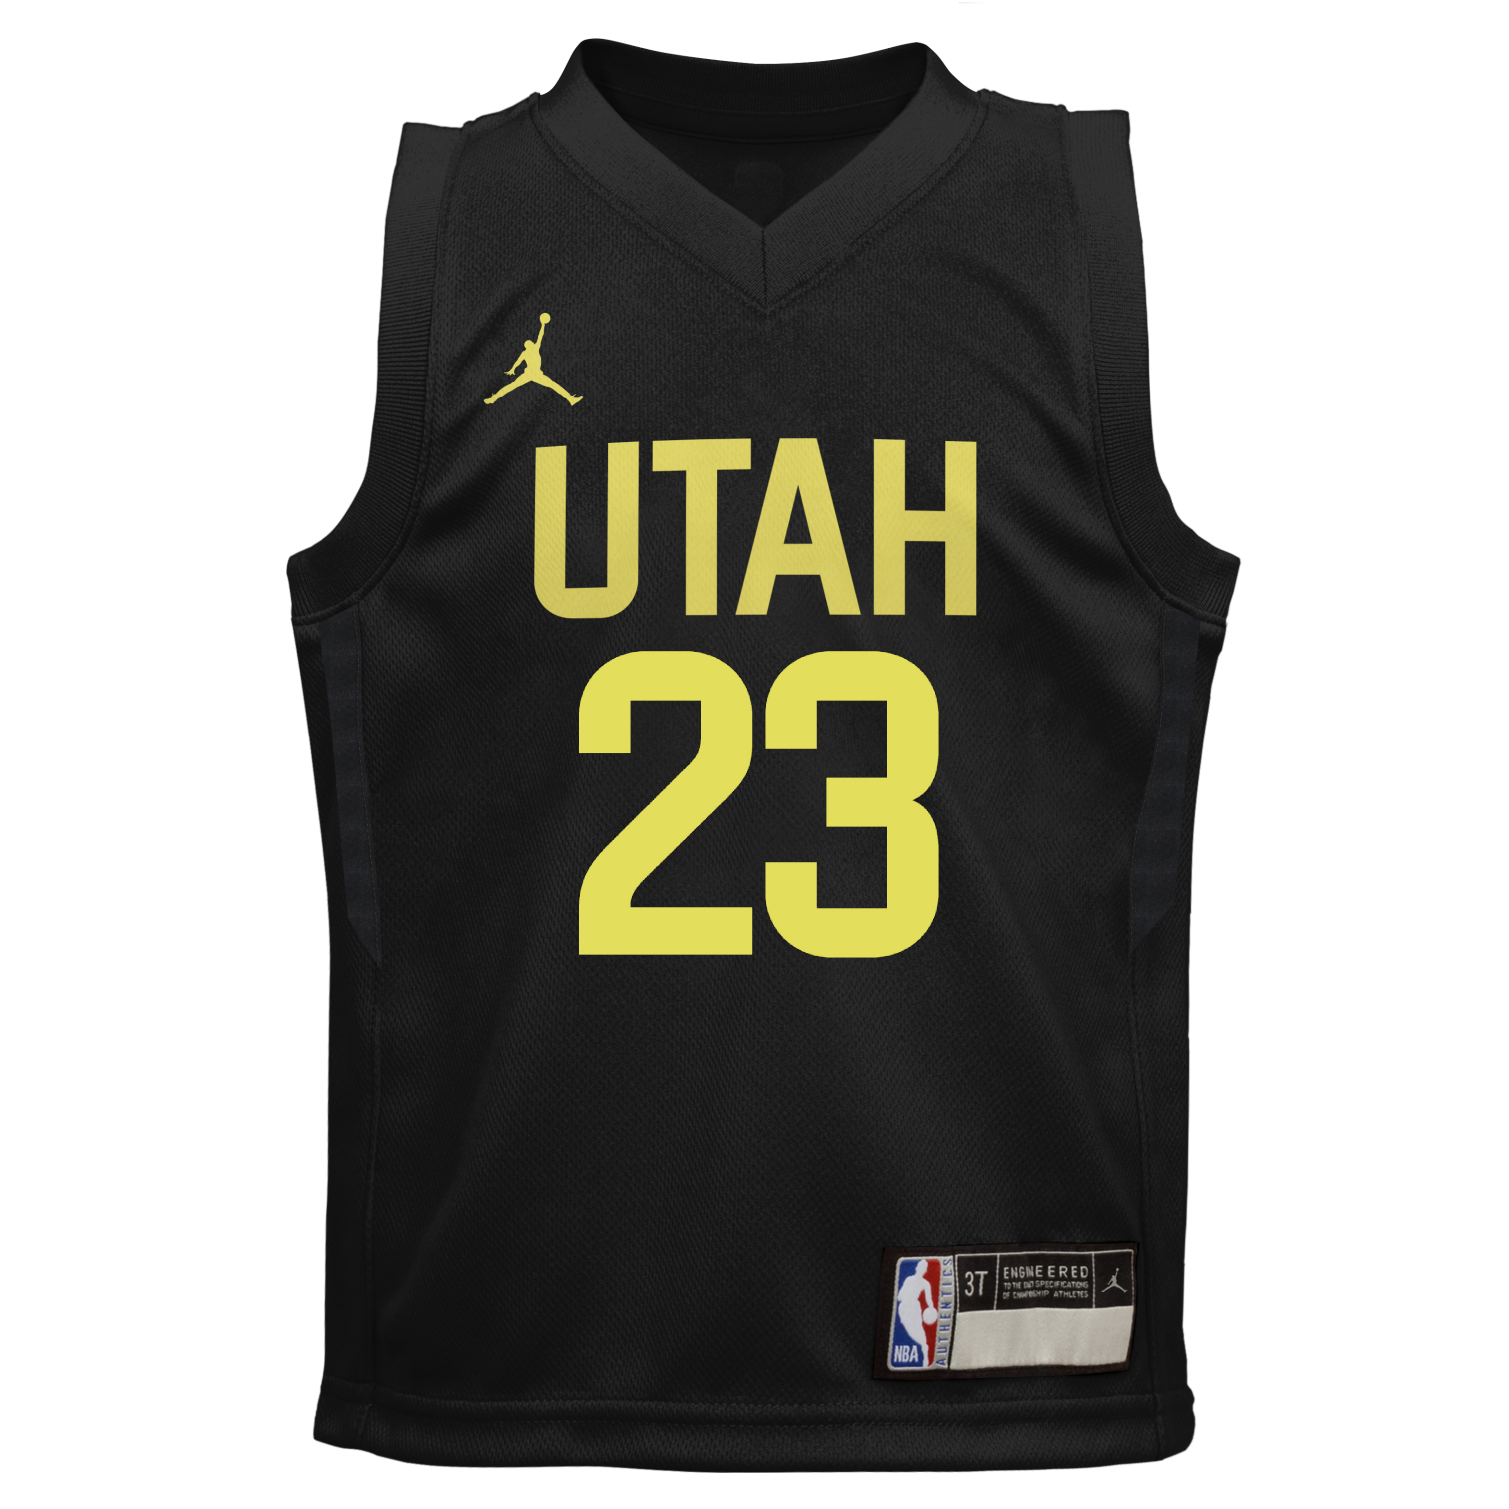 J o r d a n Clarkson Utah Jazz Classic Edition NBA Jersey